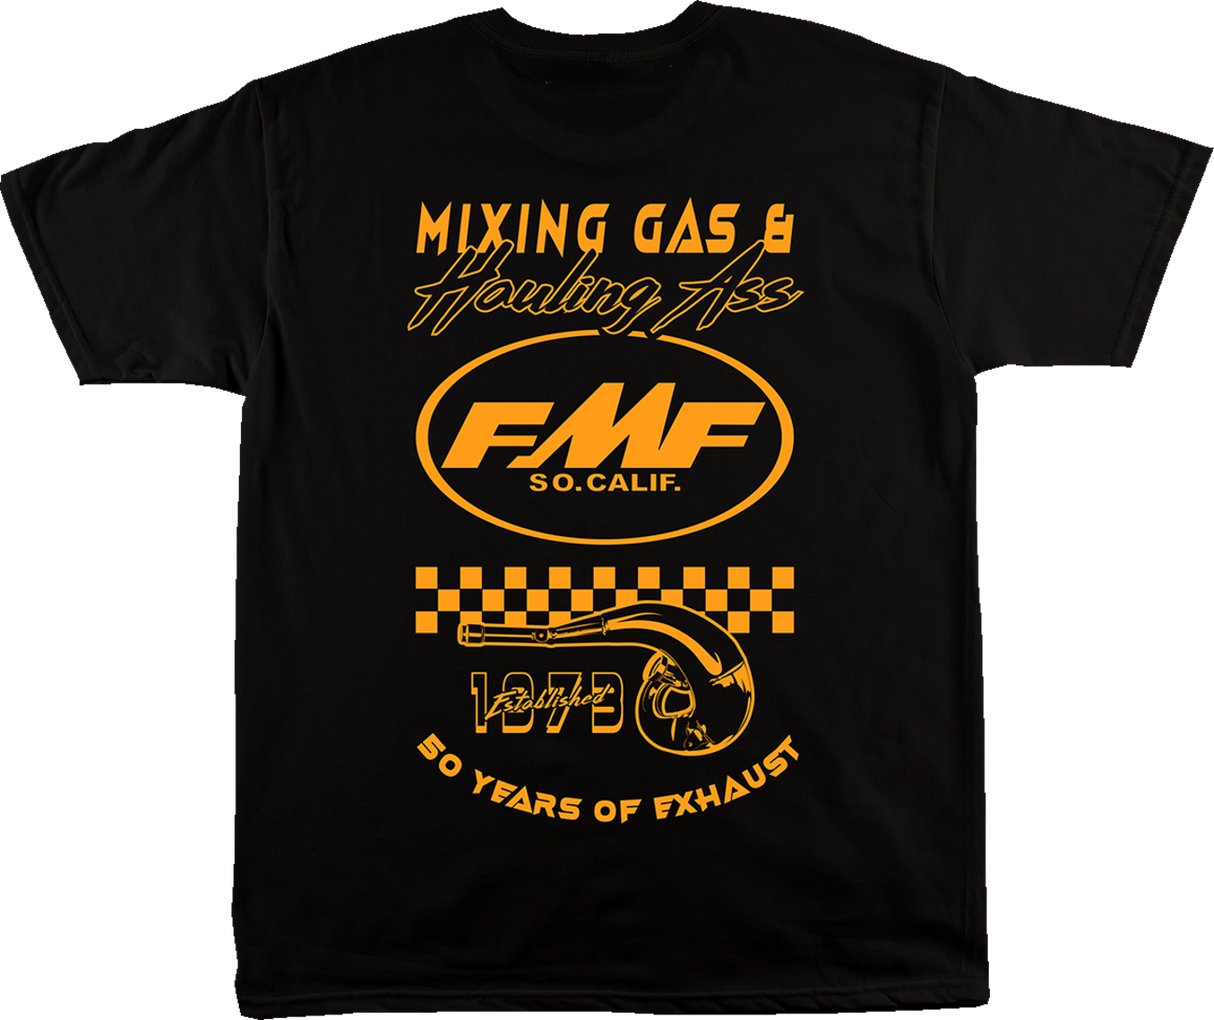 FMF Iconic T-Shirt - Black - Small FA23118910BLKSM